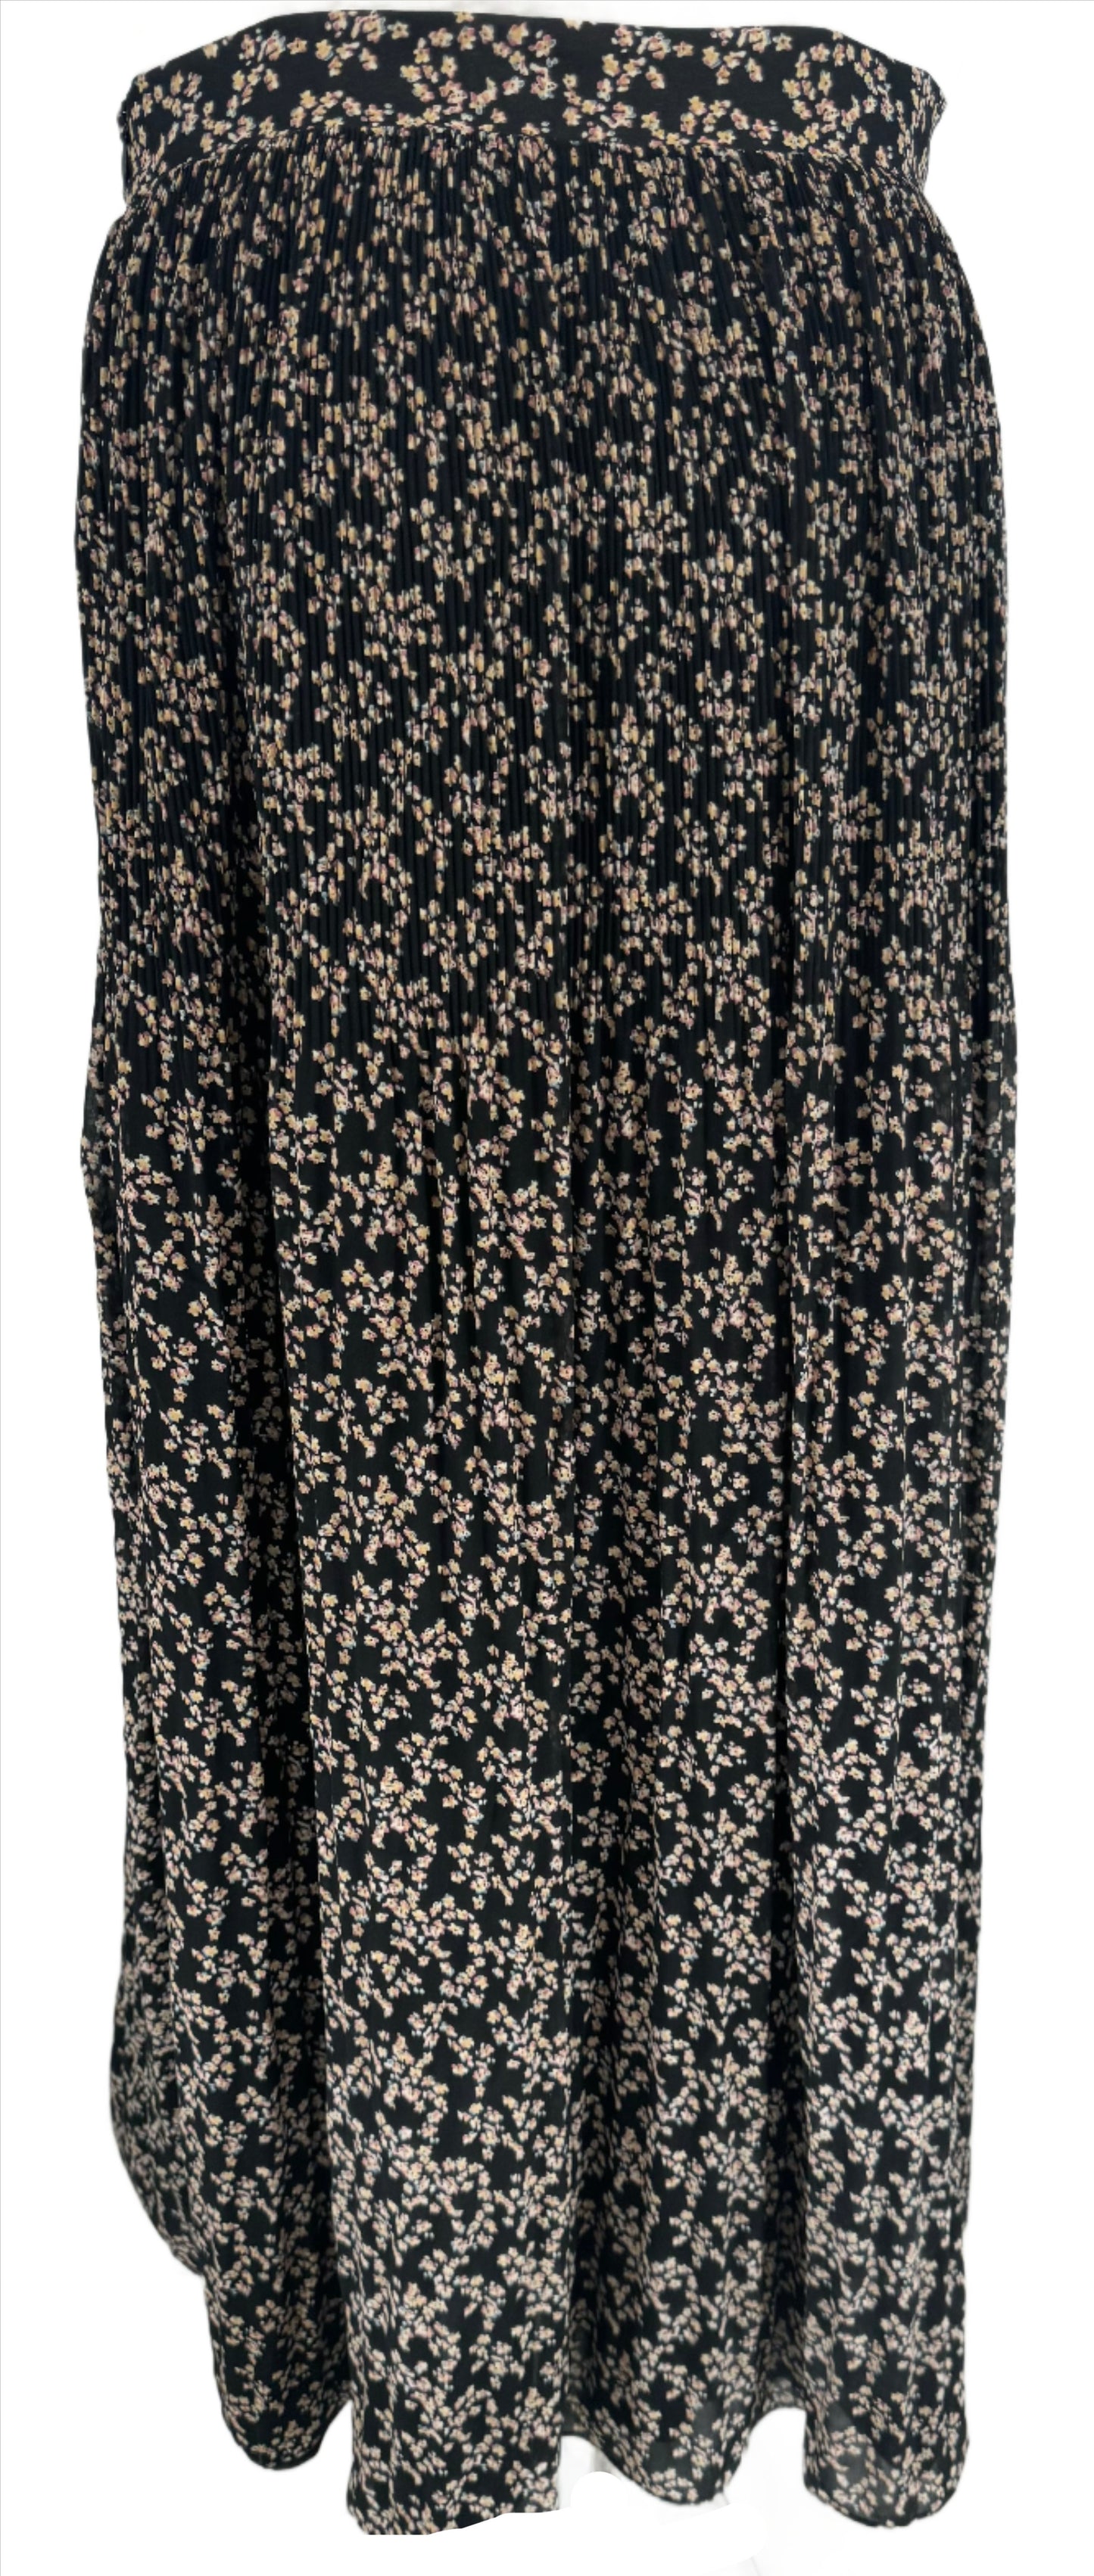 Black Floral Pleated Maxi Skirt